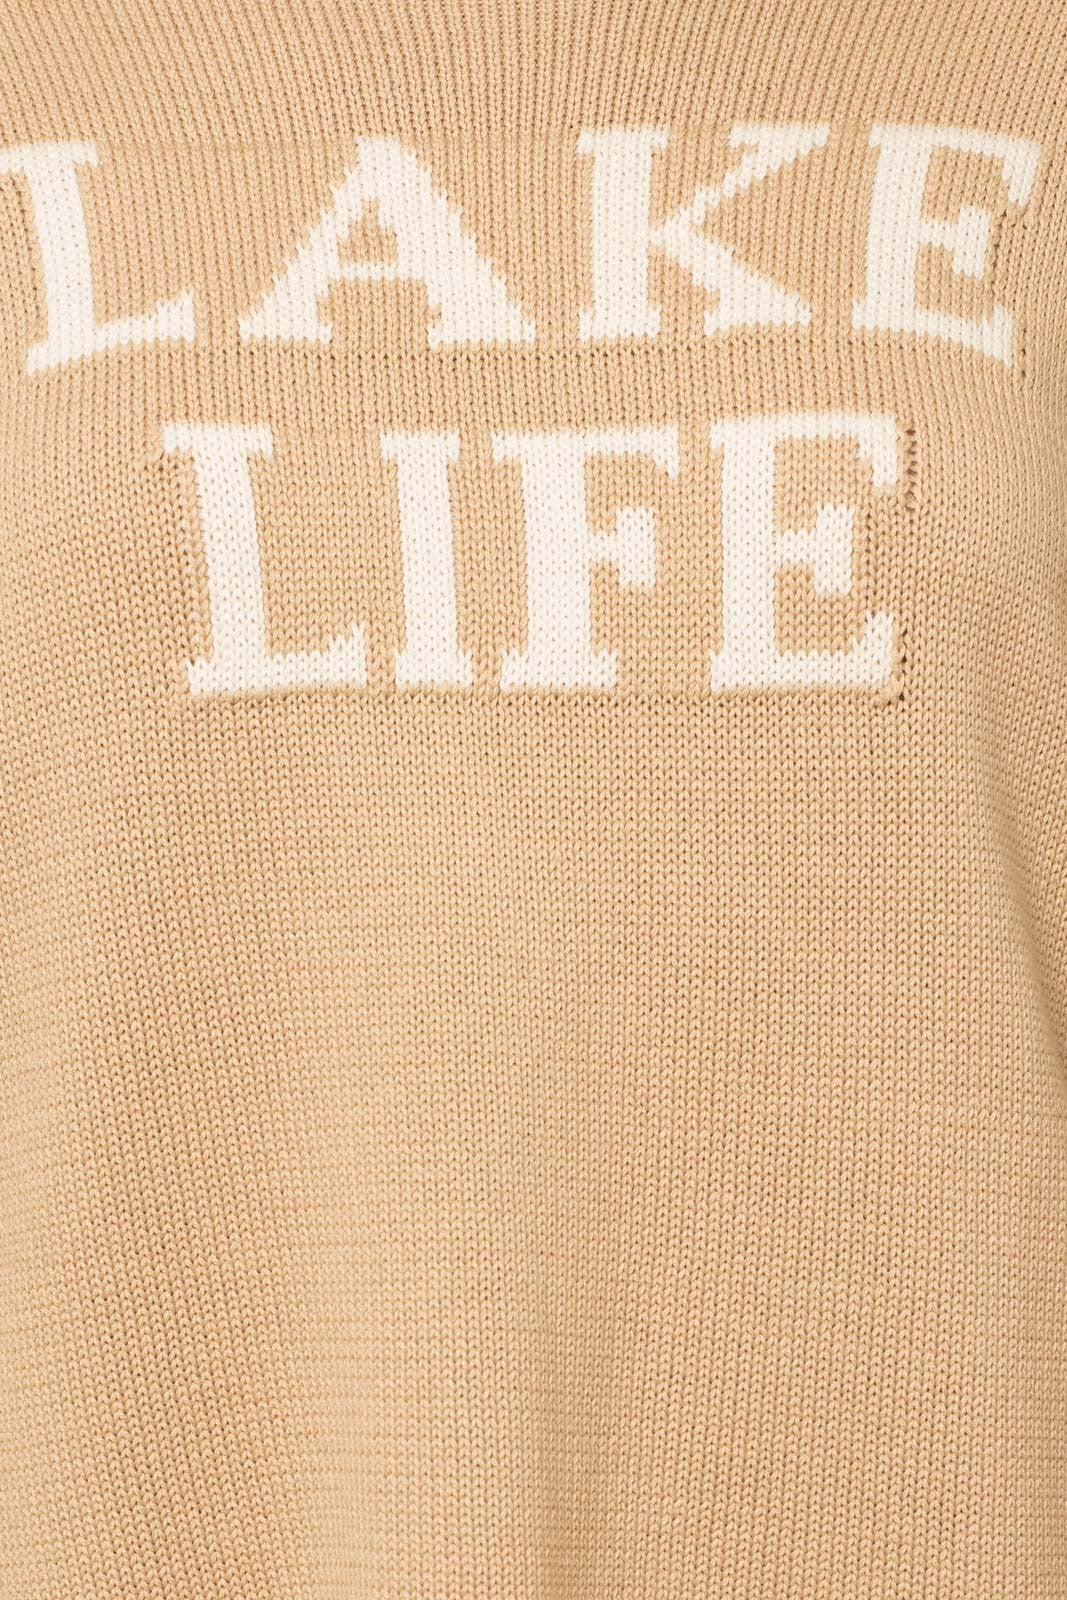 "LAKE LIFE" SWEATER